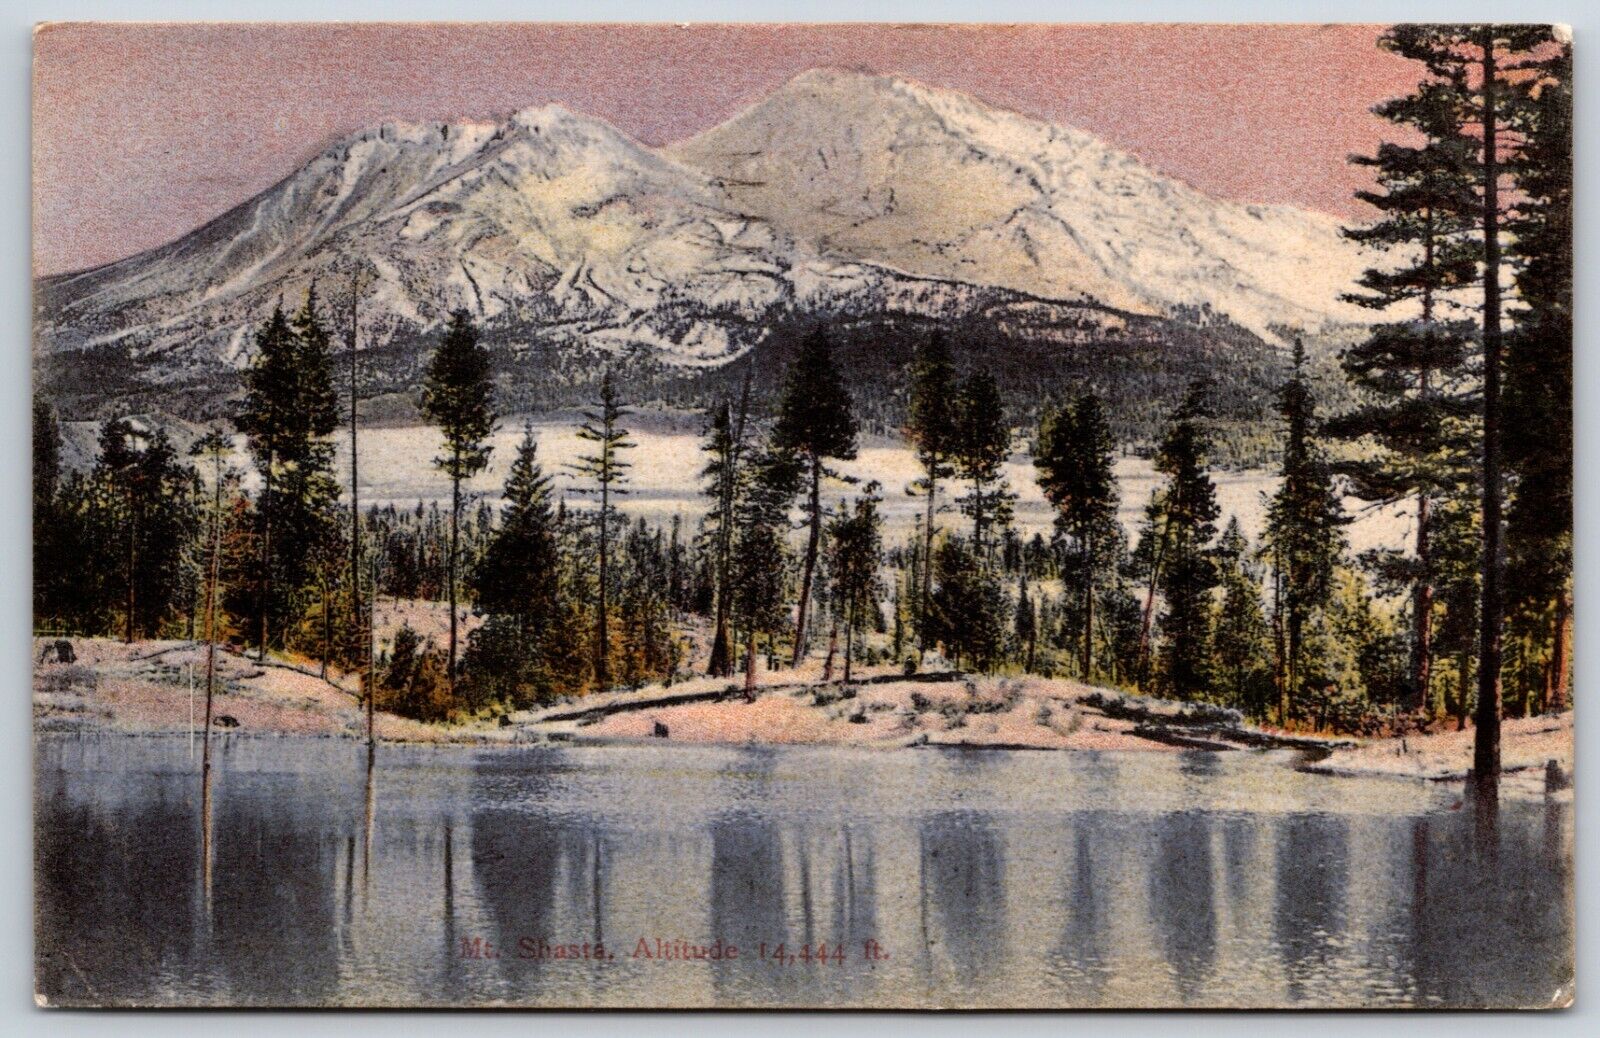 Postcard Mt. Shasta,  14,444 feet, Mount Shasta, California Posted 1909